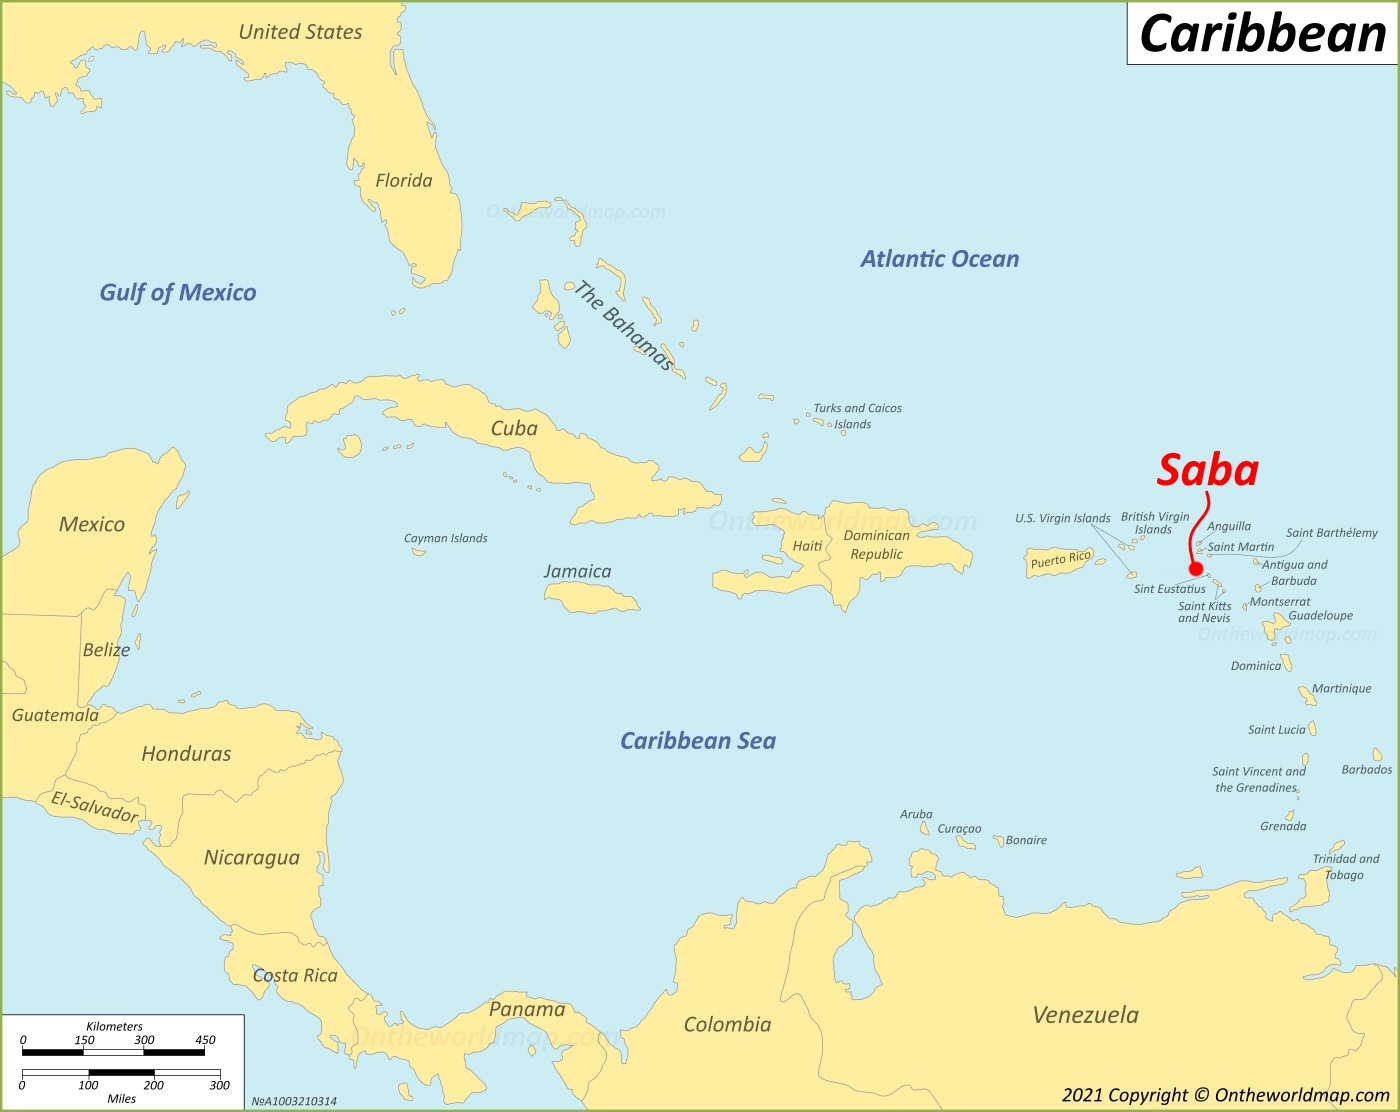 Saba location on the Caribbean Map